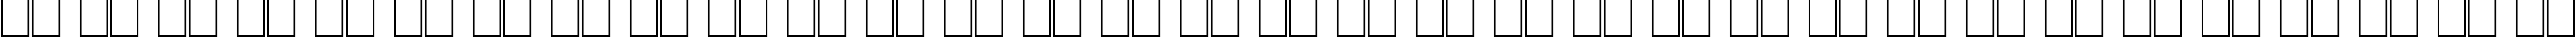 Пример написания русского алфавита шрифтом Outer zone B